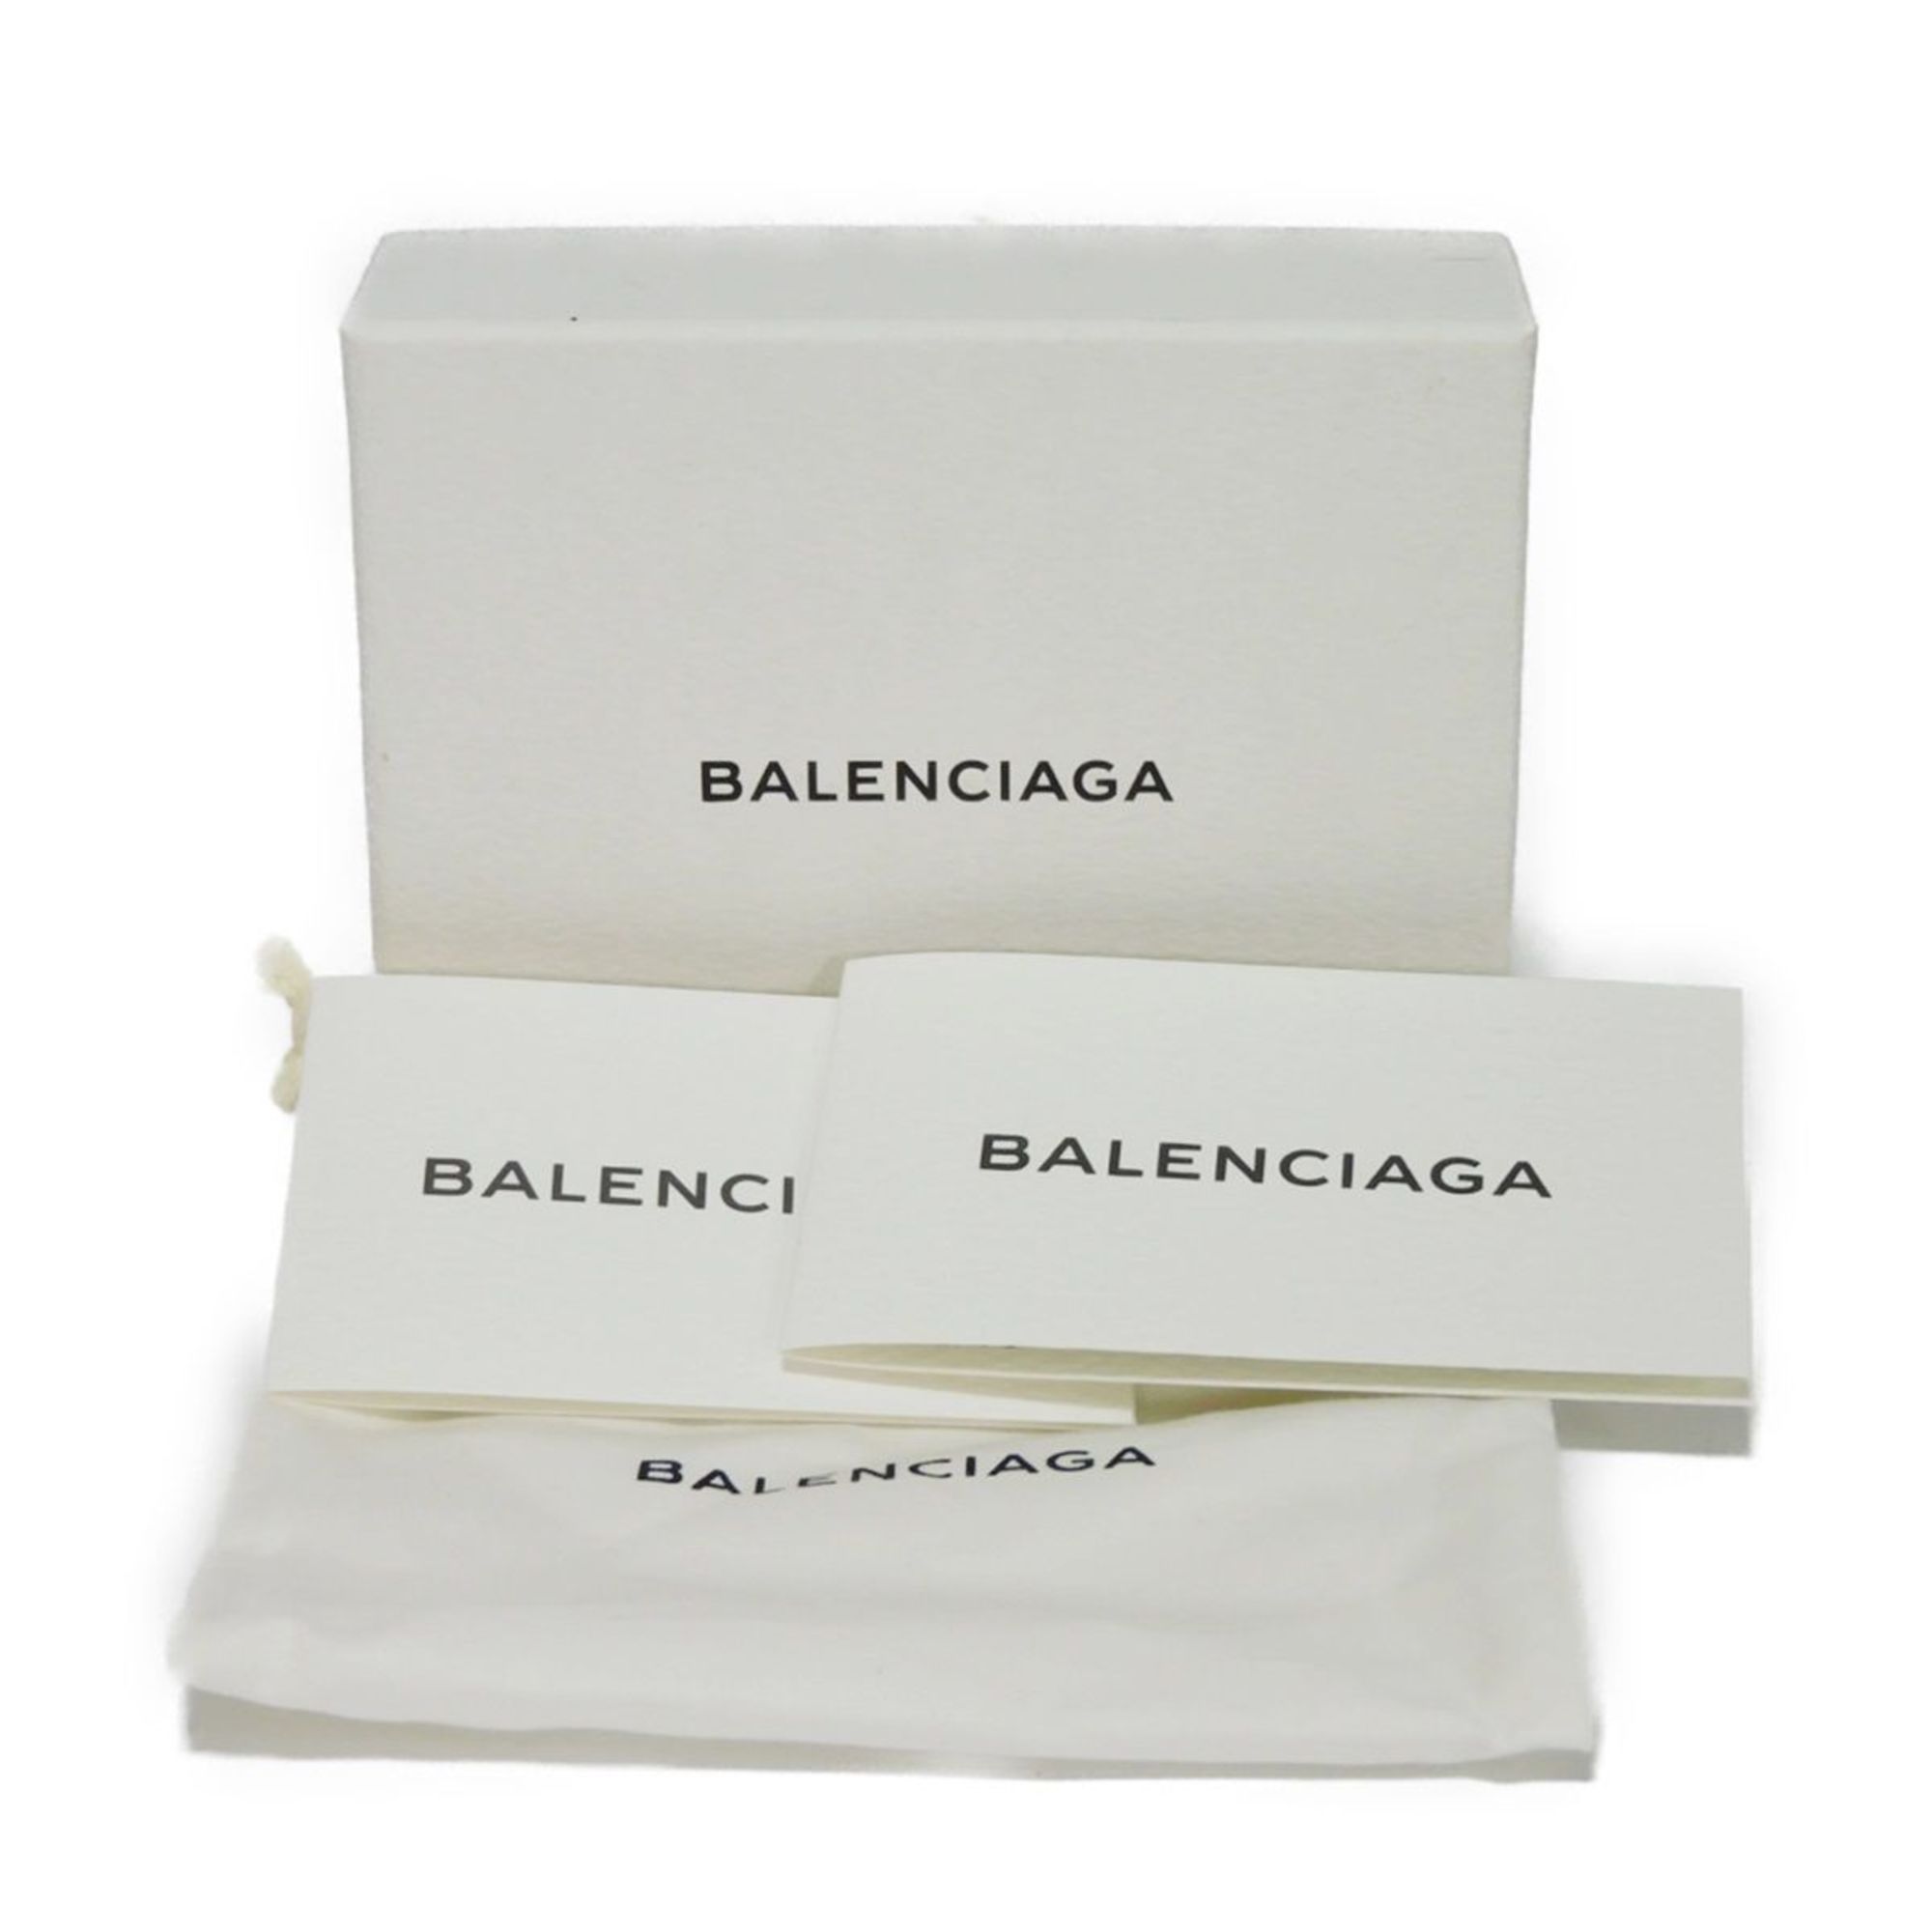 BALENCIAGA Trifold Wallet Paper Mini Foil Stamping Gray Compact Old Logo Gliacie 391446 DLQ0N 1320 Men's Women's Billfold